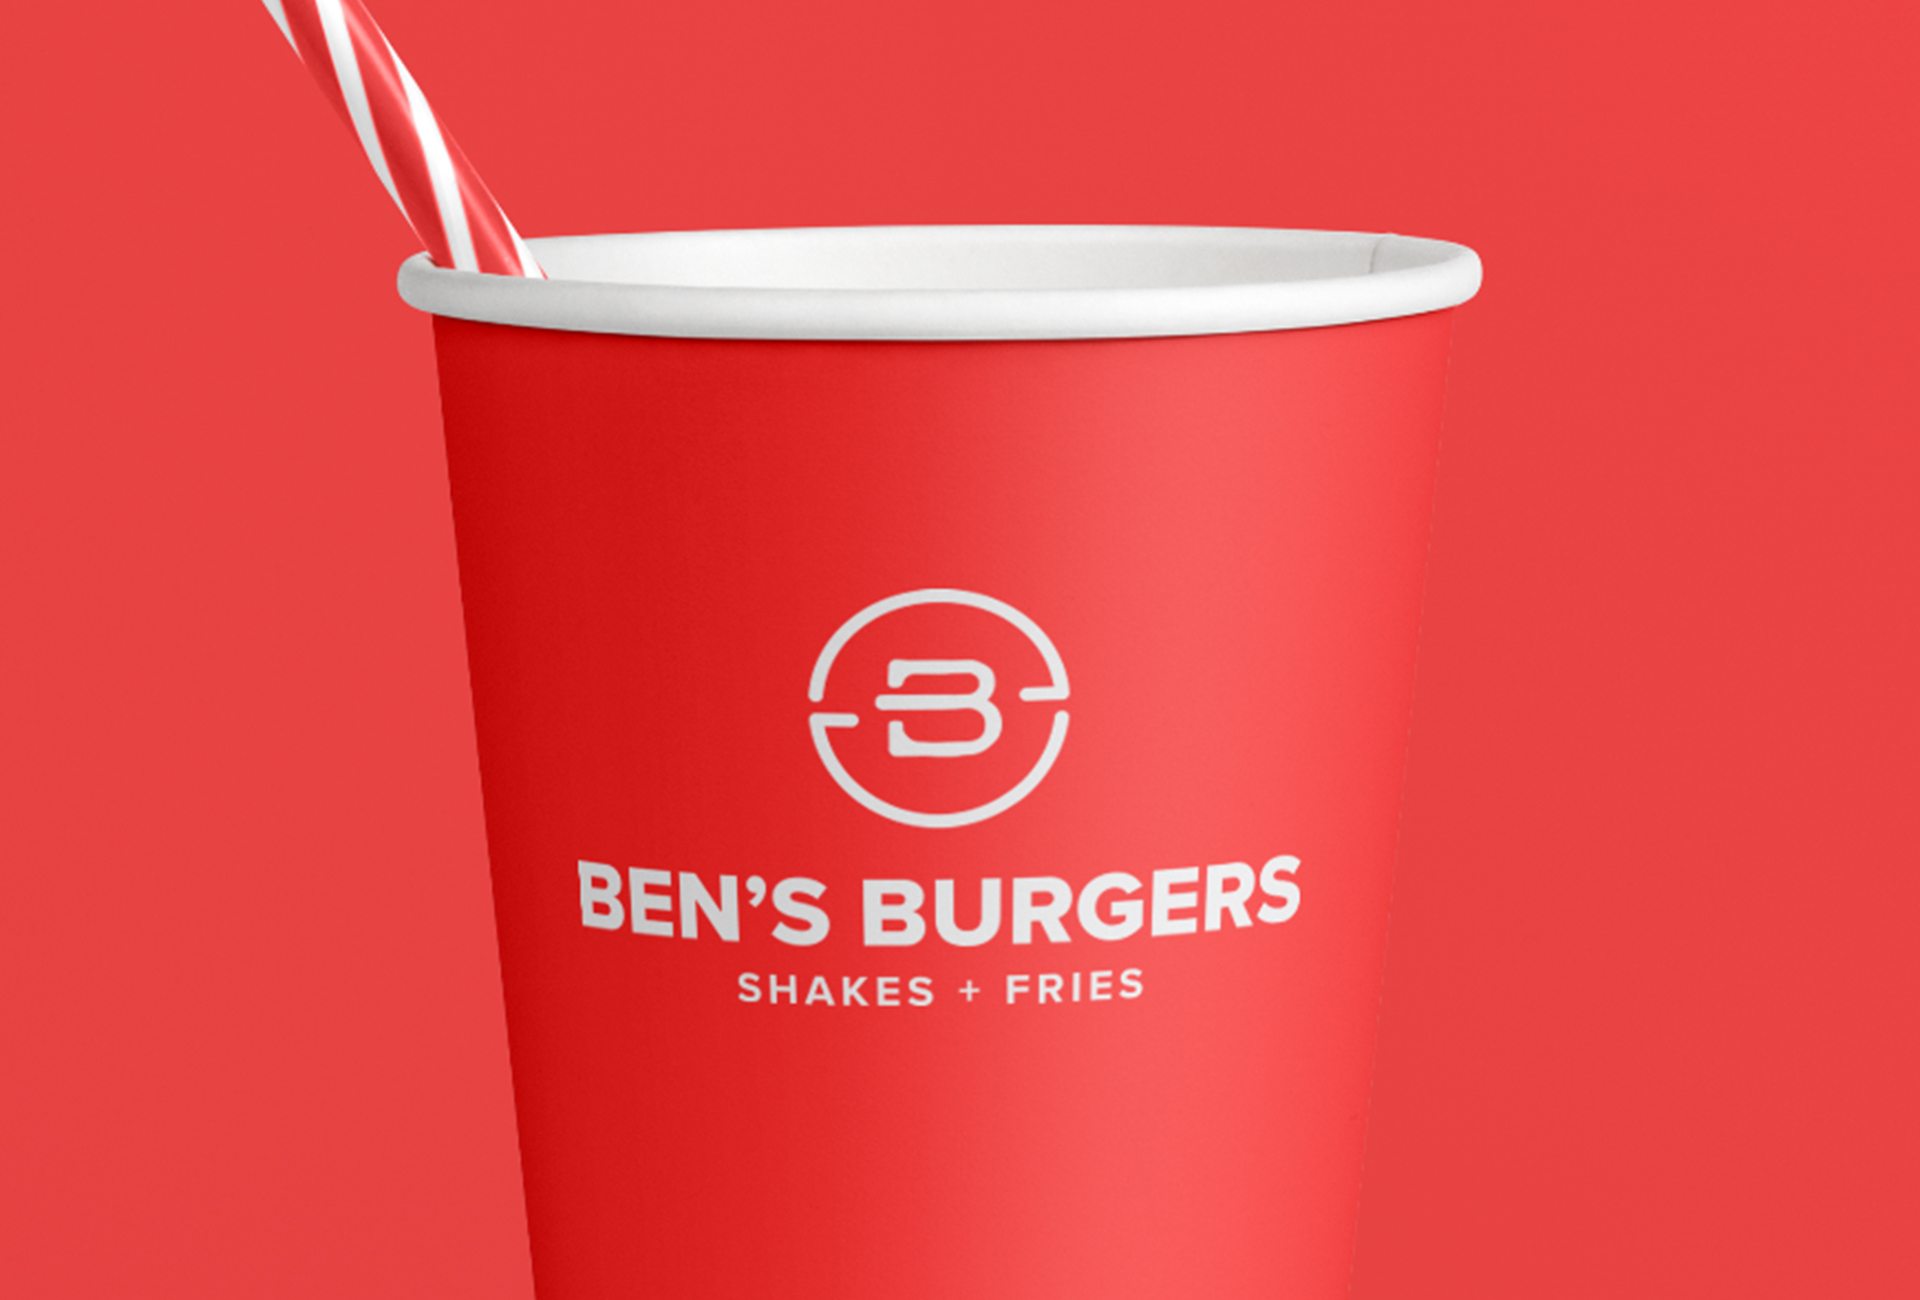 Ben's Burgers logo on cup